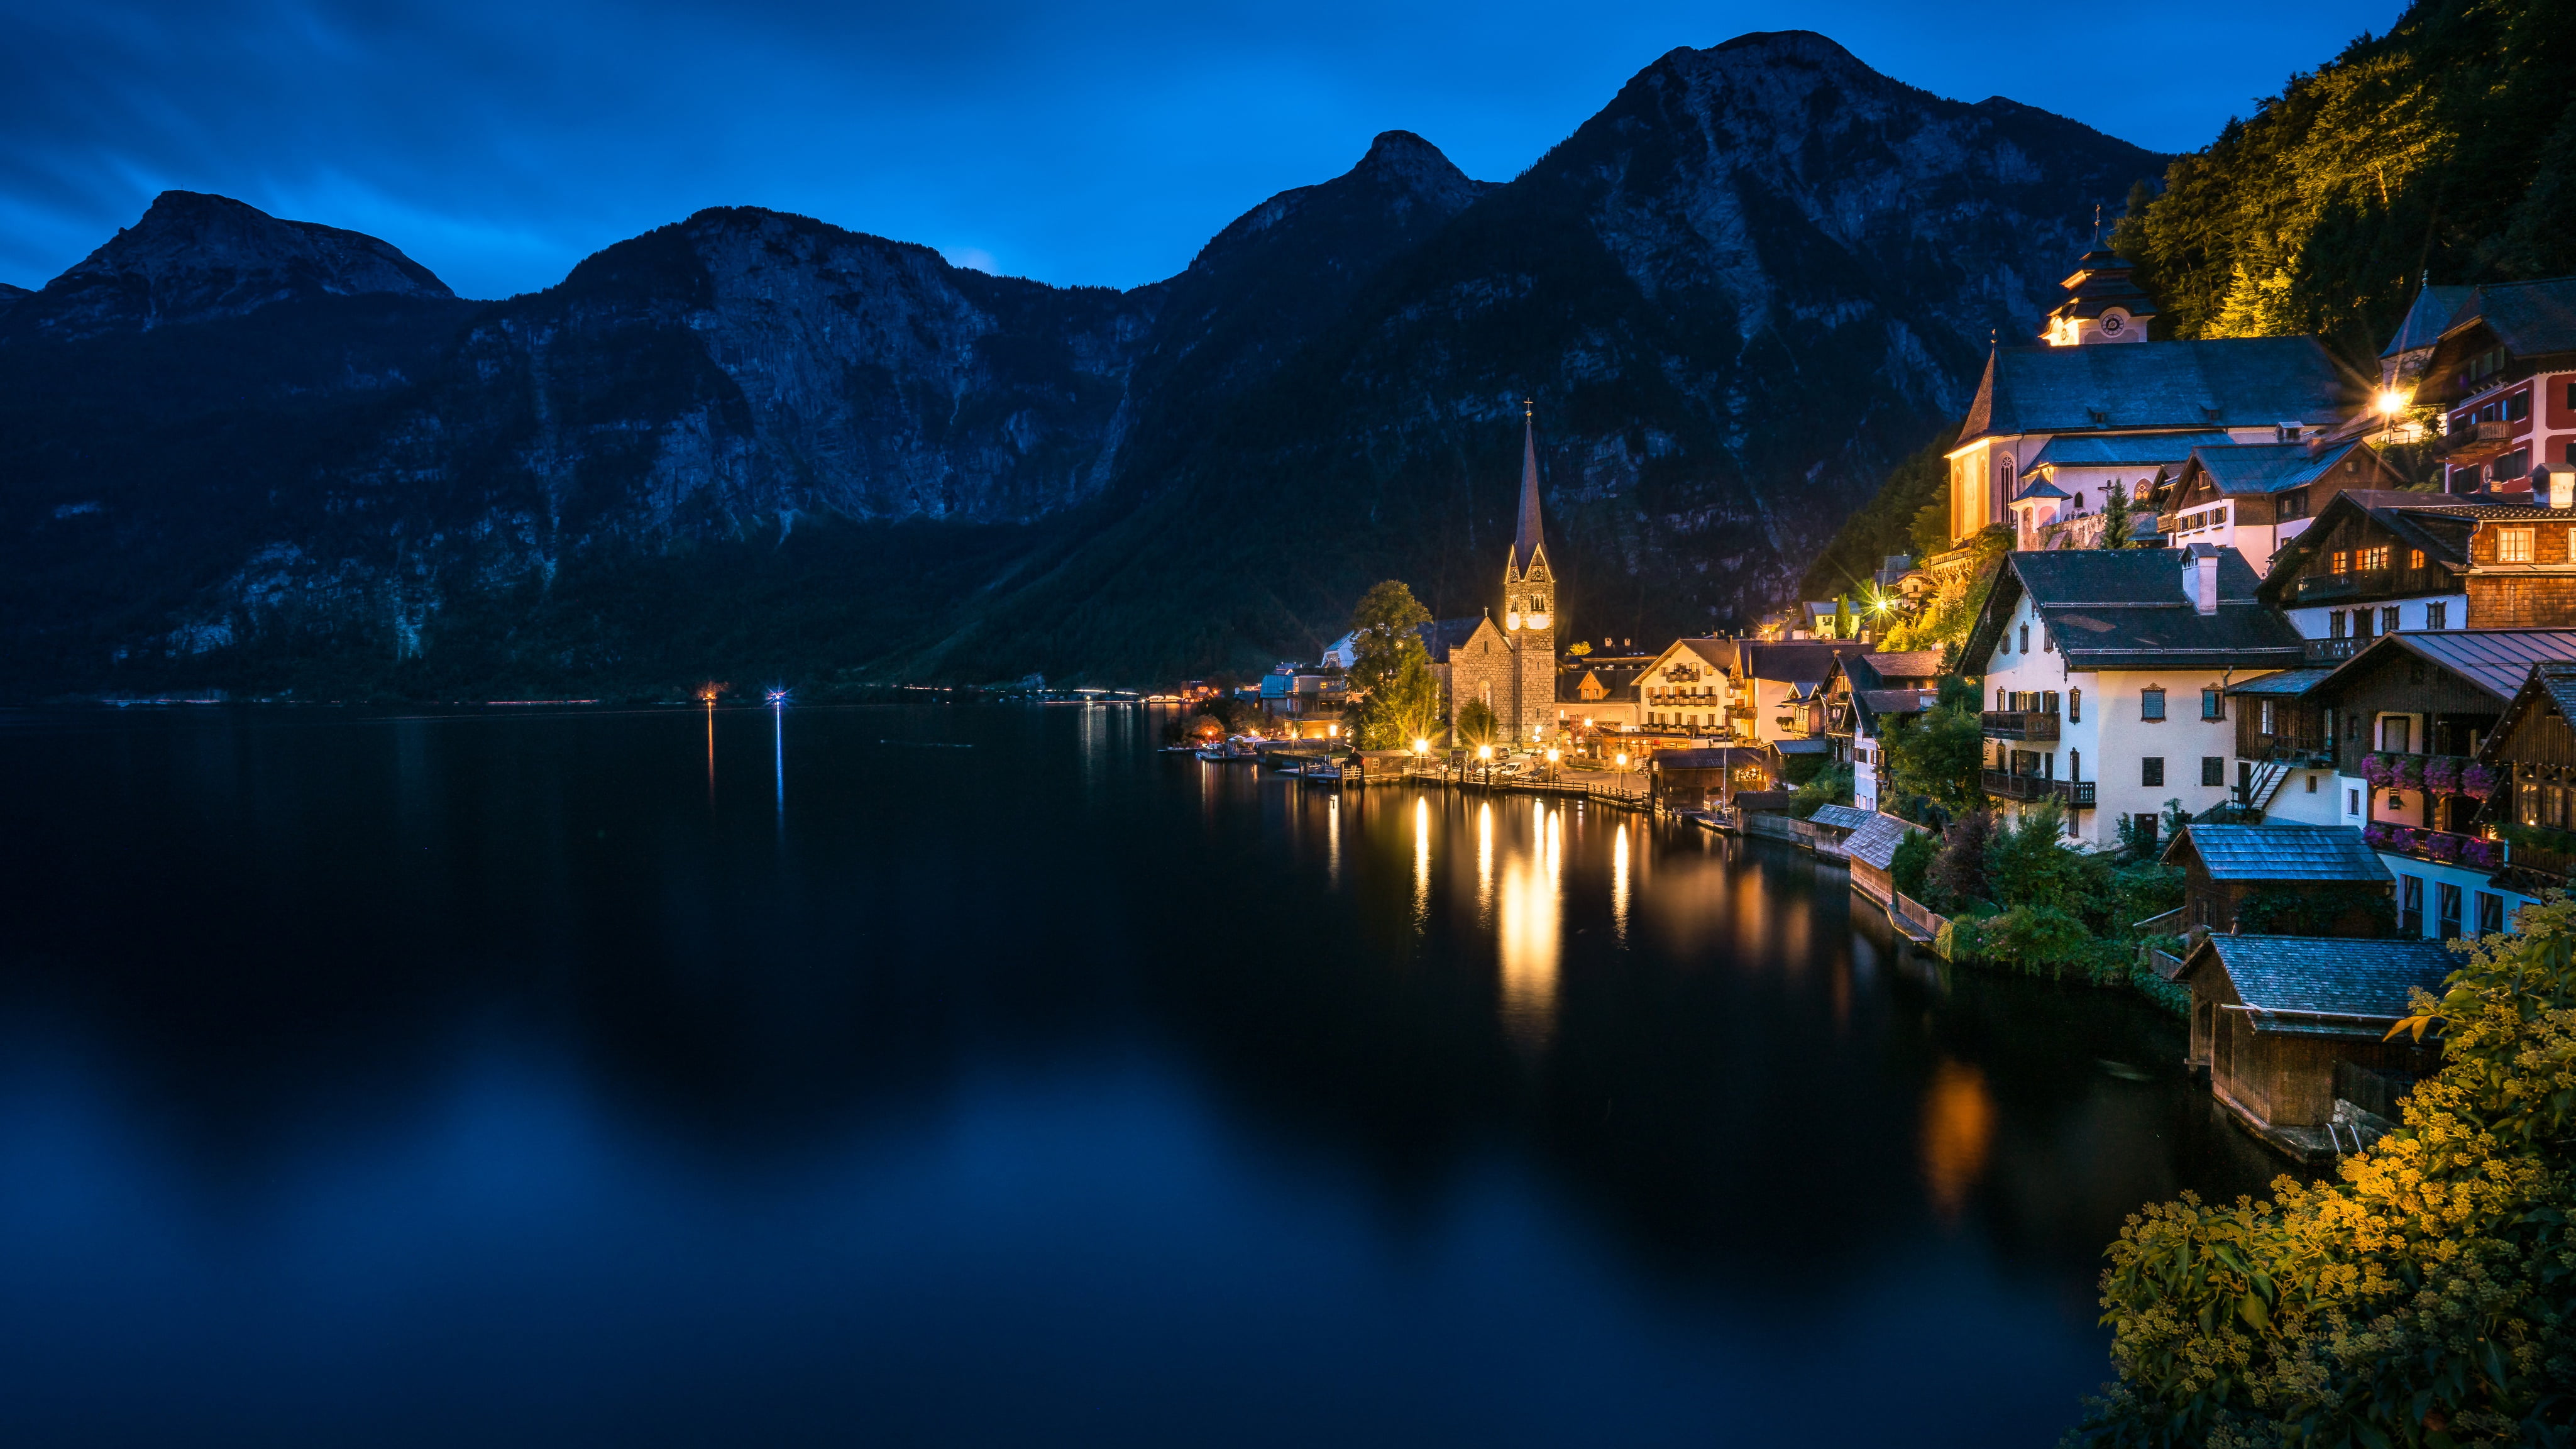 mountains, night, lake, building, home, Austria, Alps, town